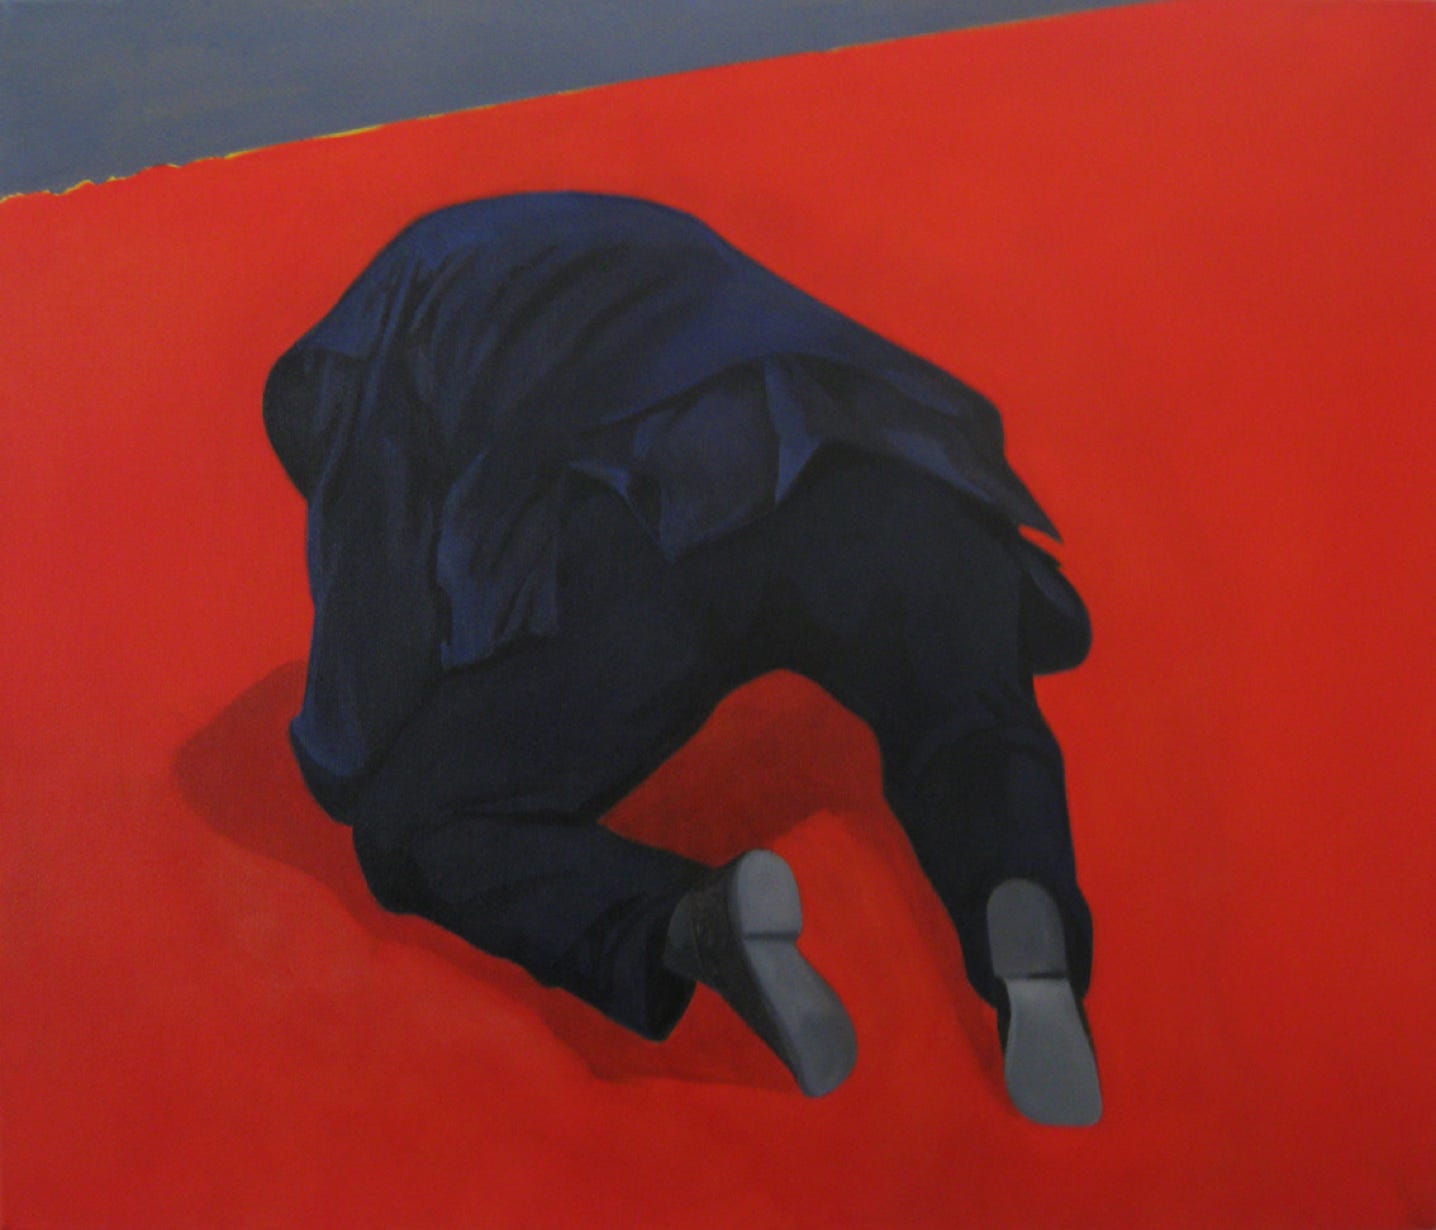 60x70 cm, oil on canvas, 2010